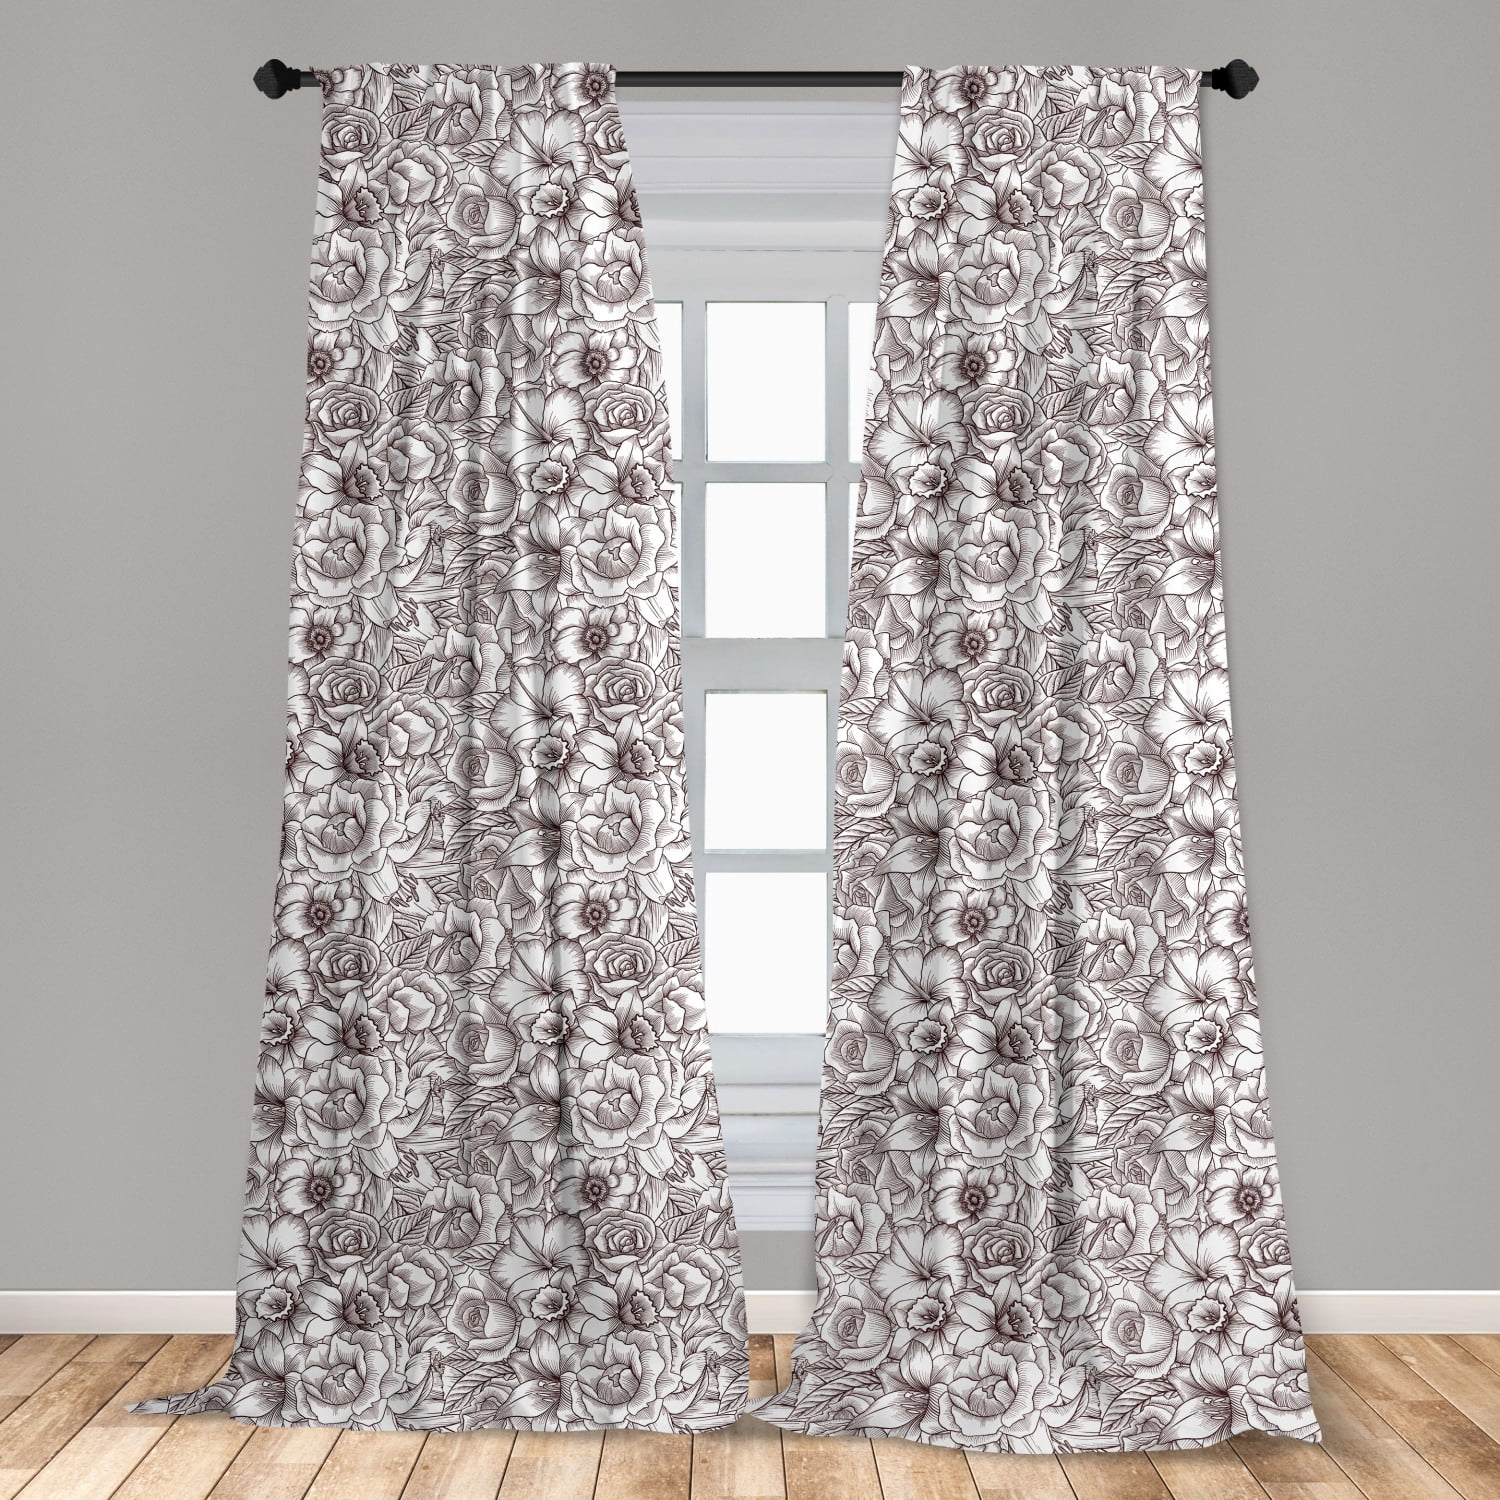 Ethnic Boho Curtains Curtain Flower Window Treatment Drapes Living Room Bedroom